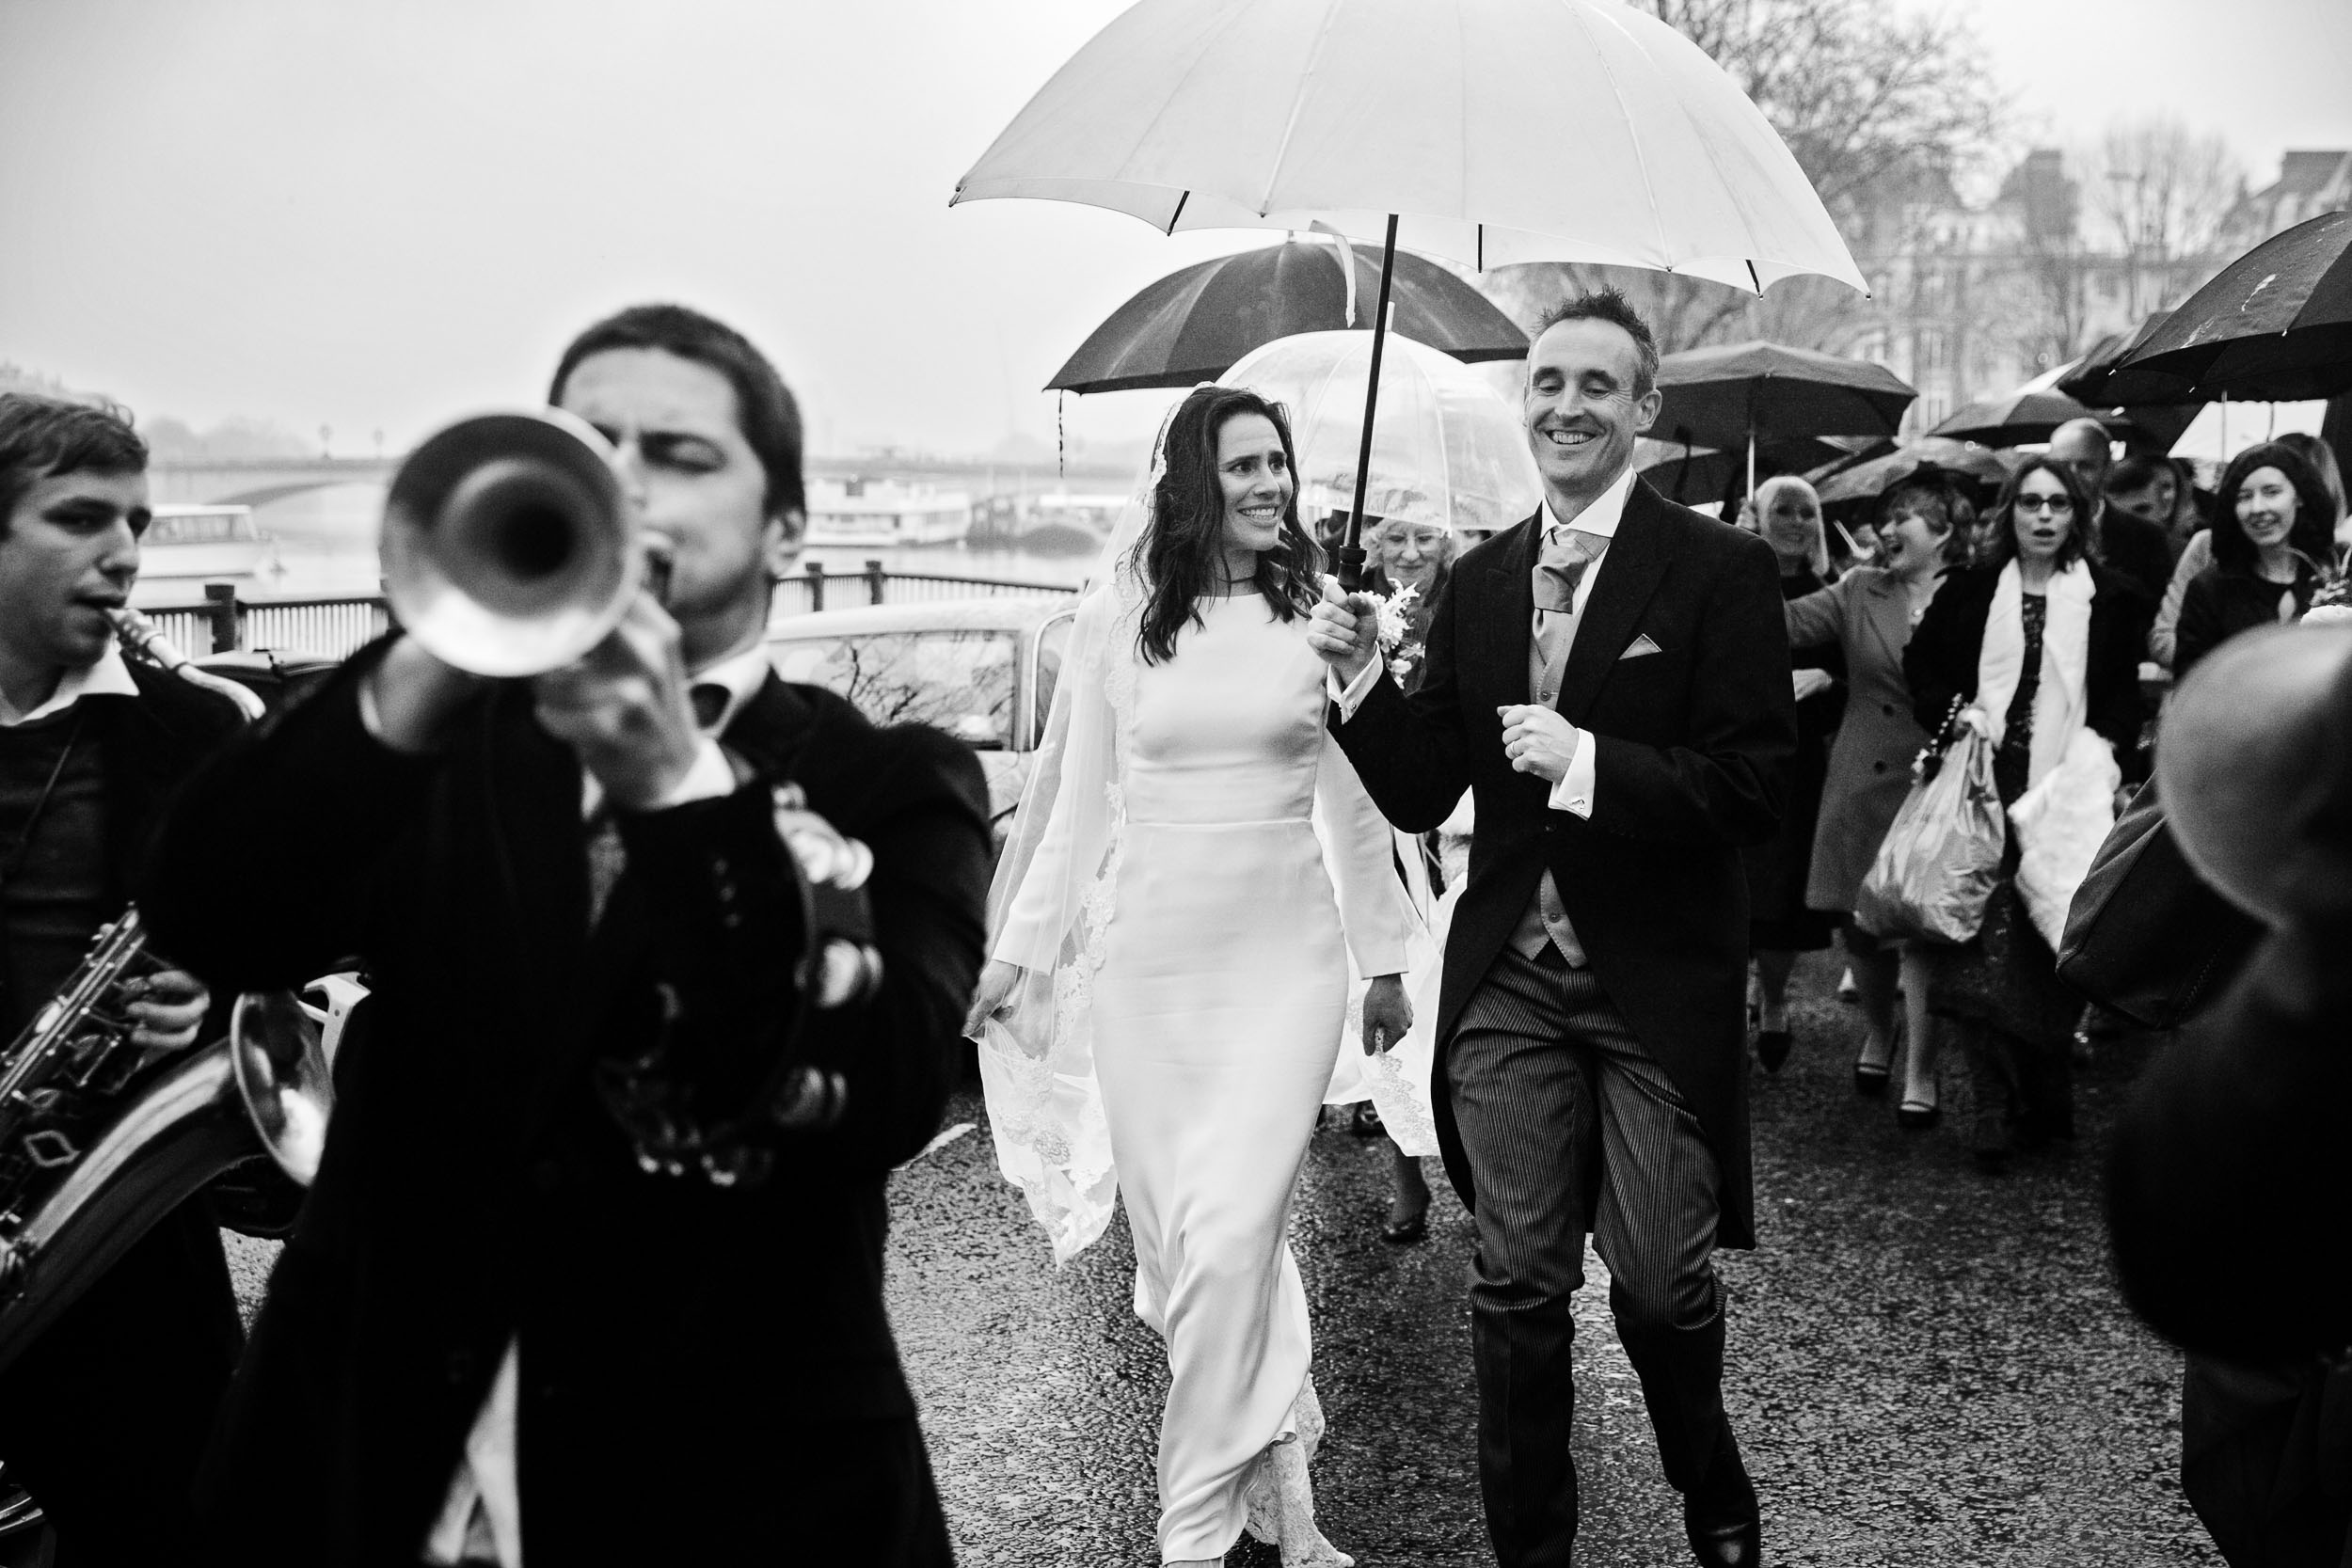 st-martin-in-the-field-wedding-photographer-london 093.jpg